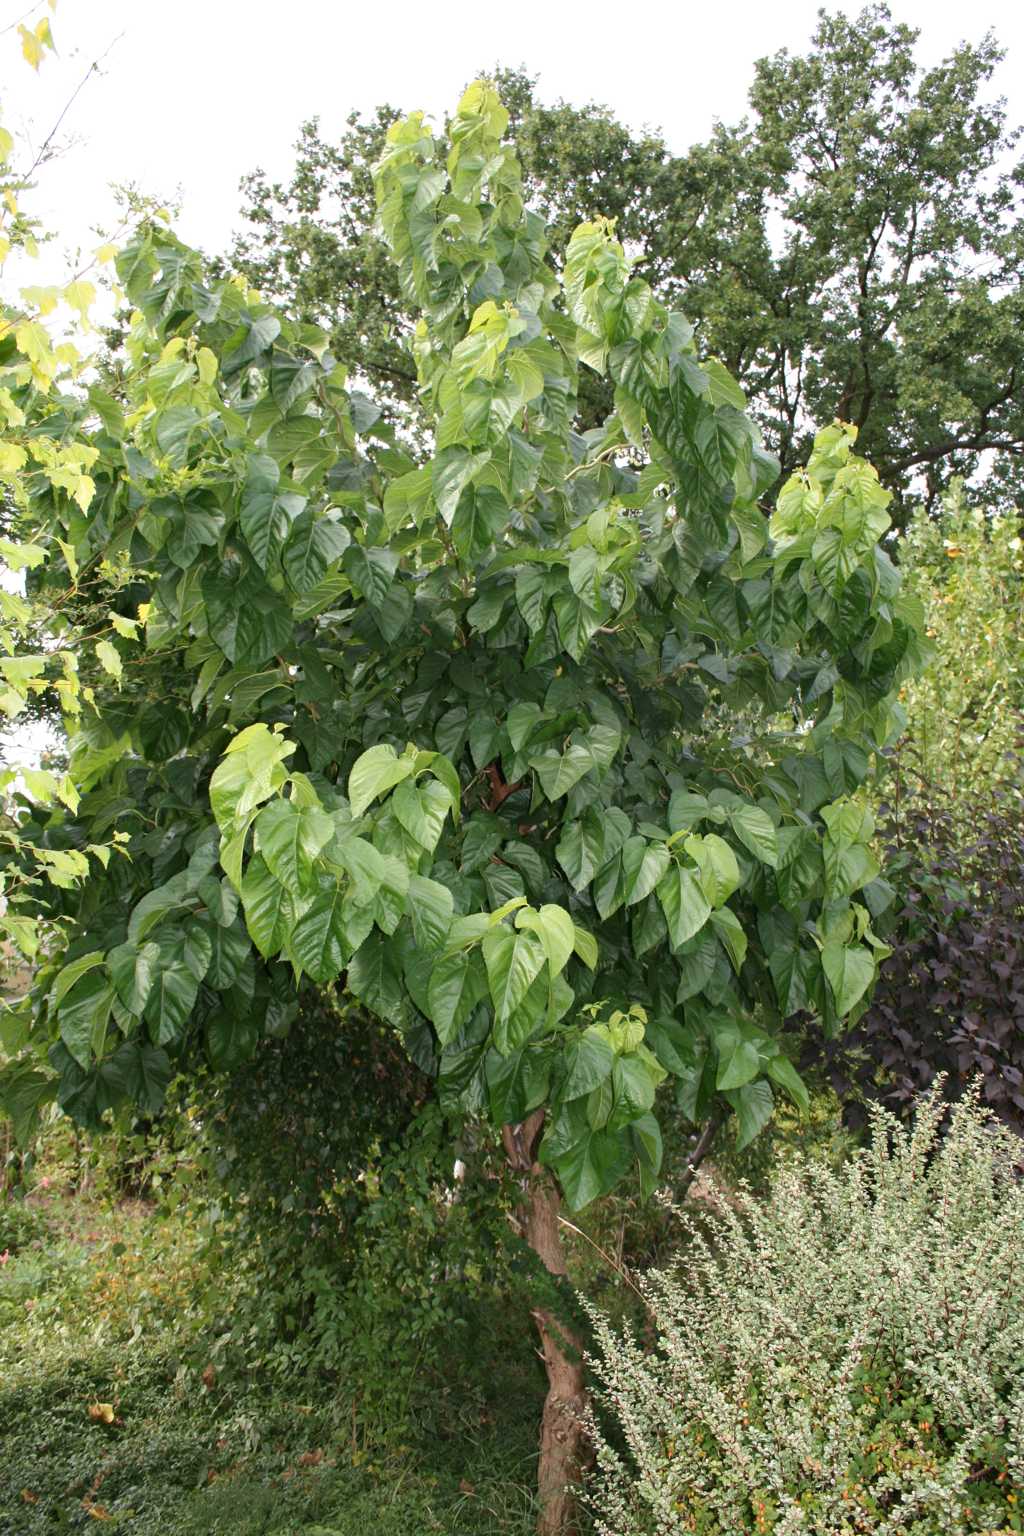 Morwa szerokolistna "Spirata" / Morus latifolia "Spirata"